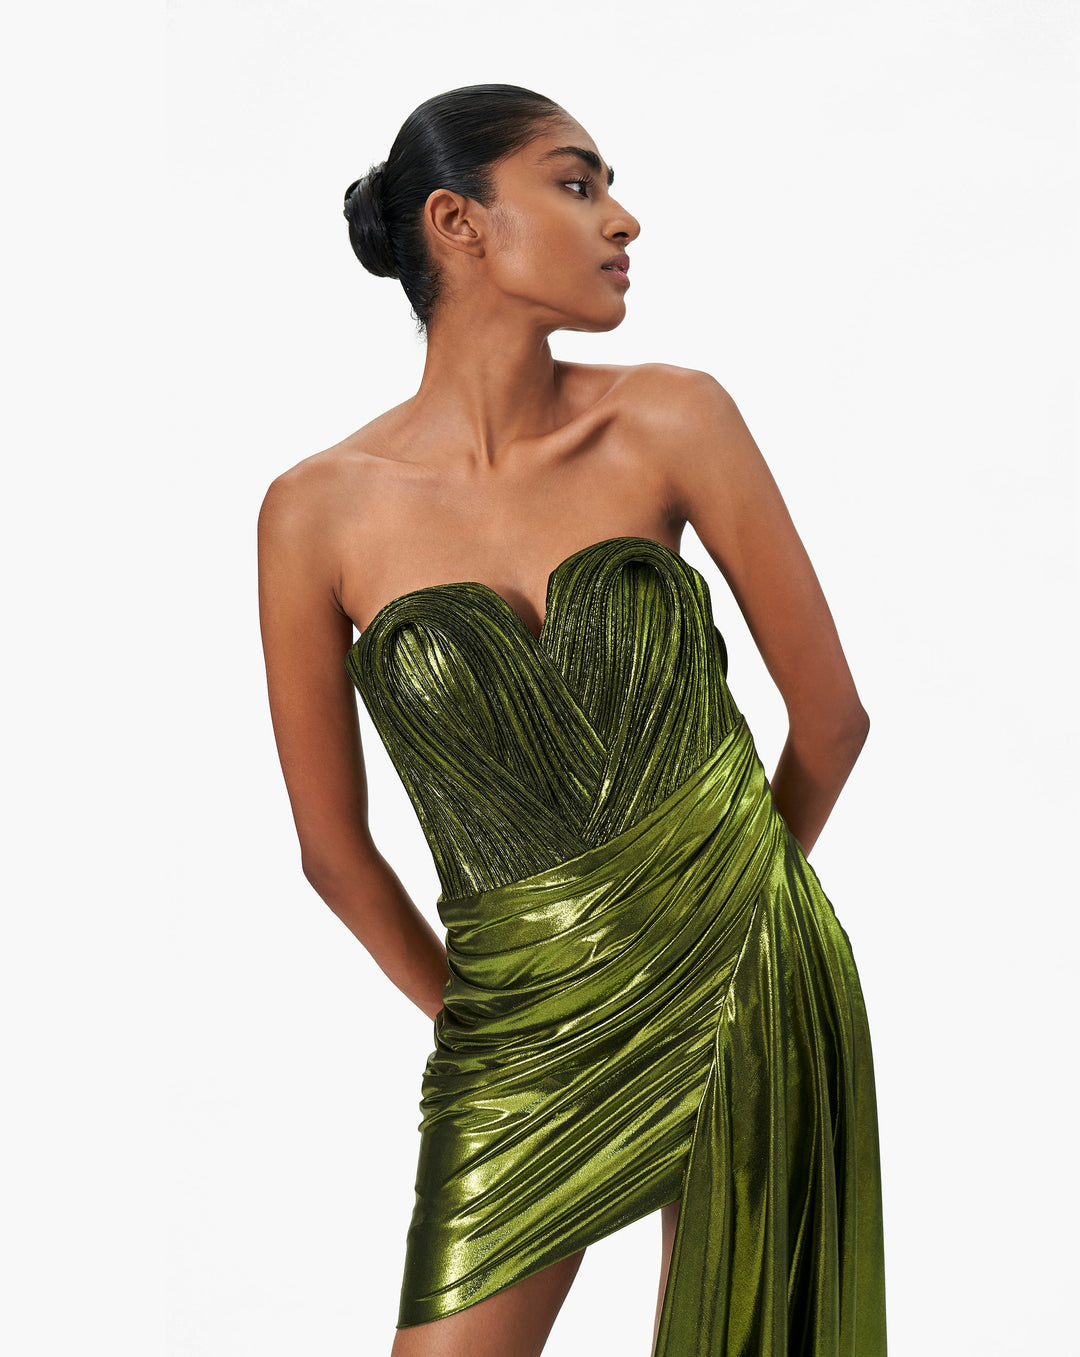 The Glistening Drape Sculpted Dress